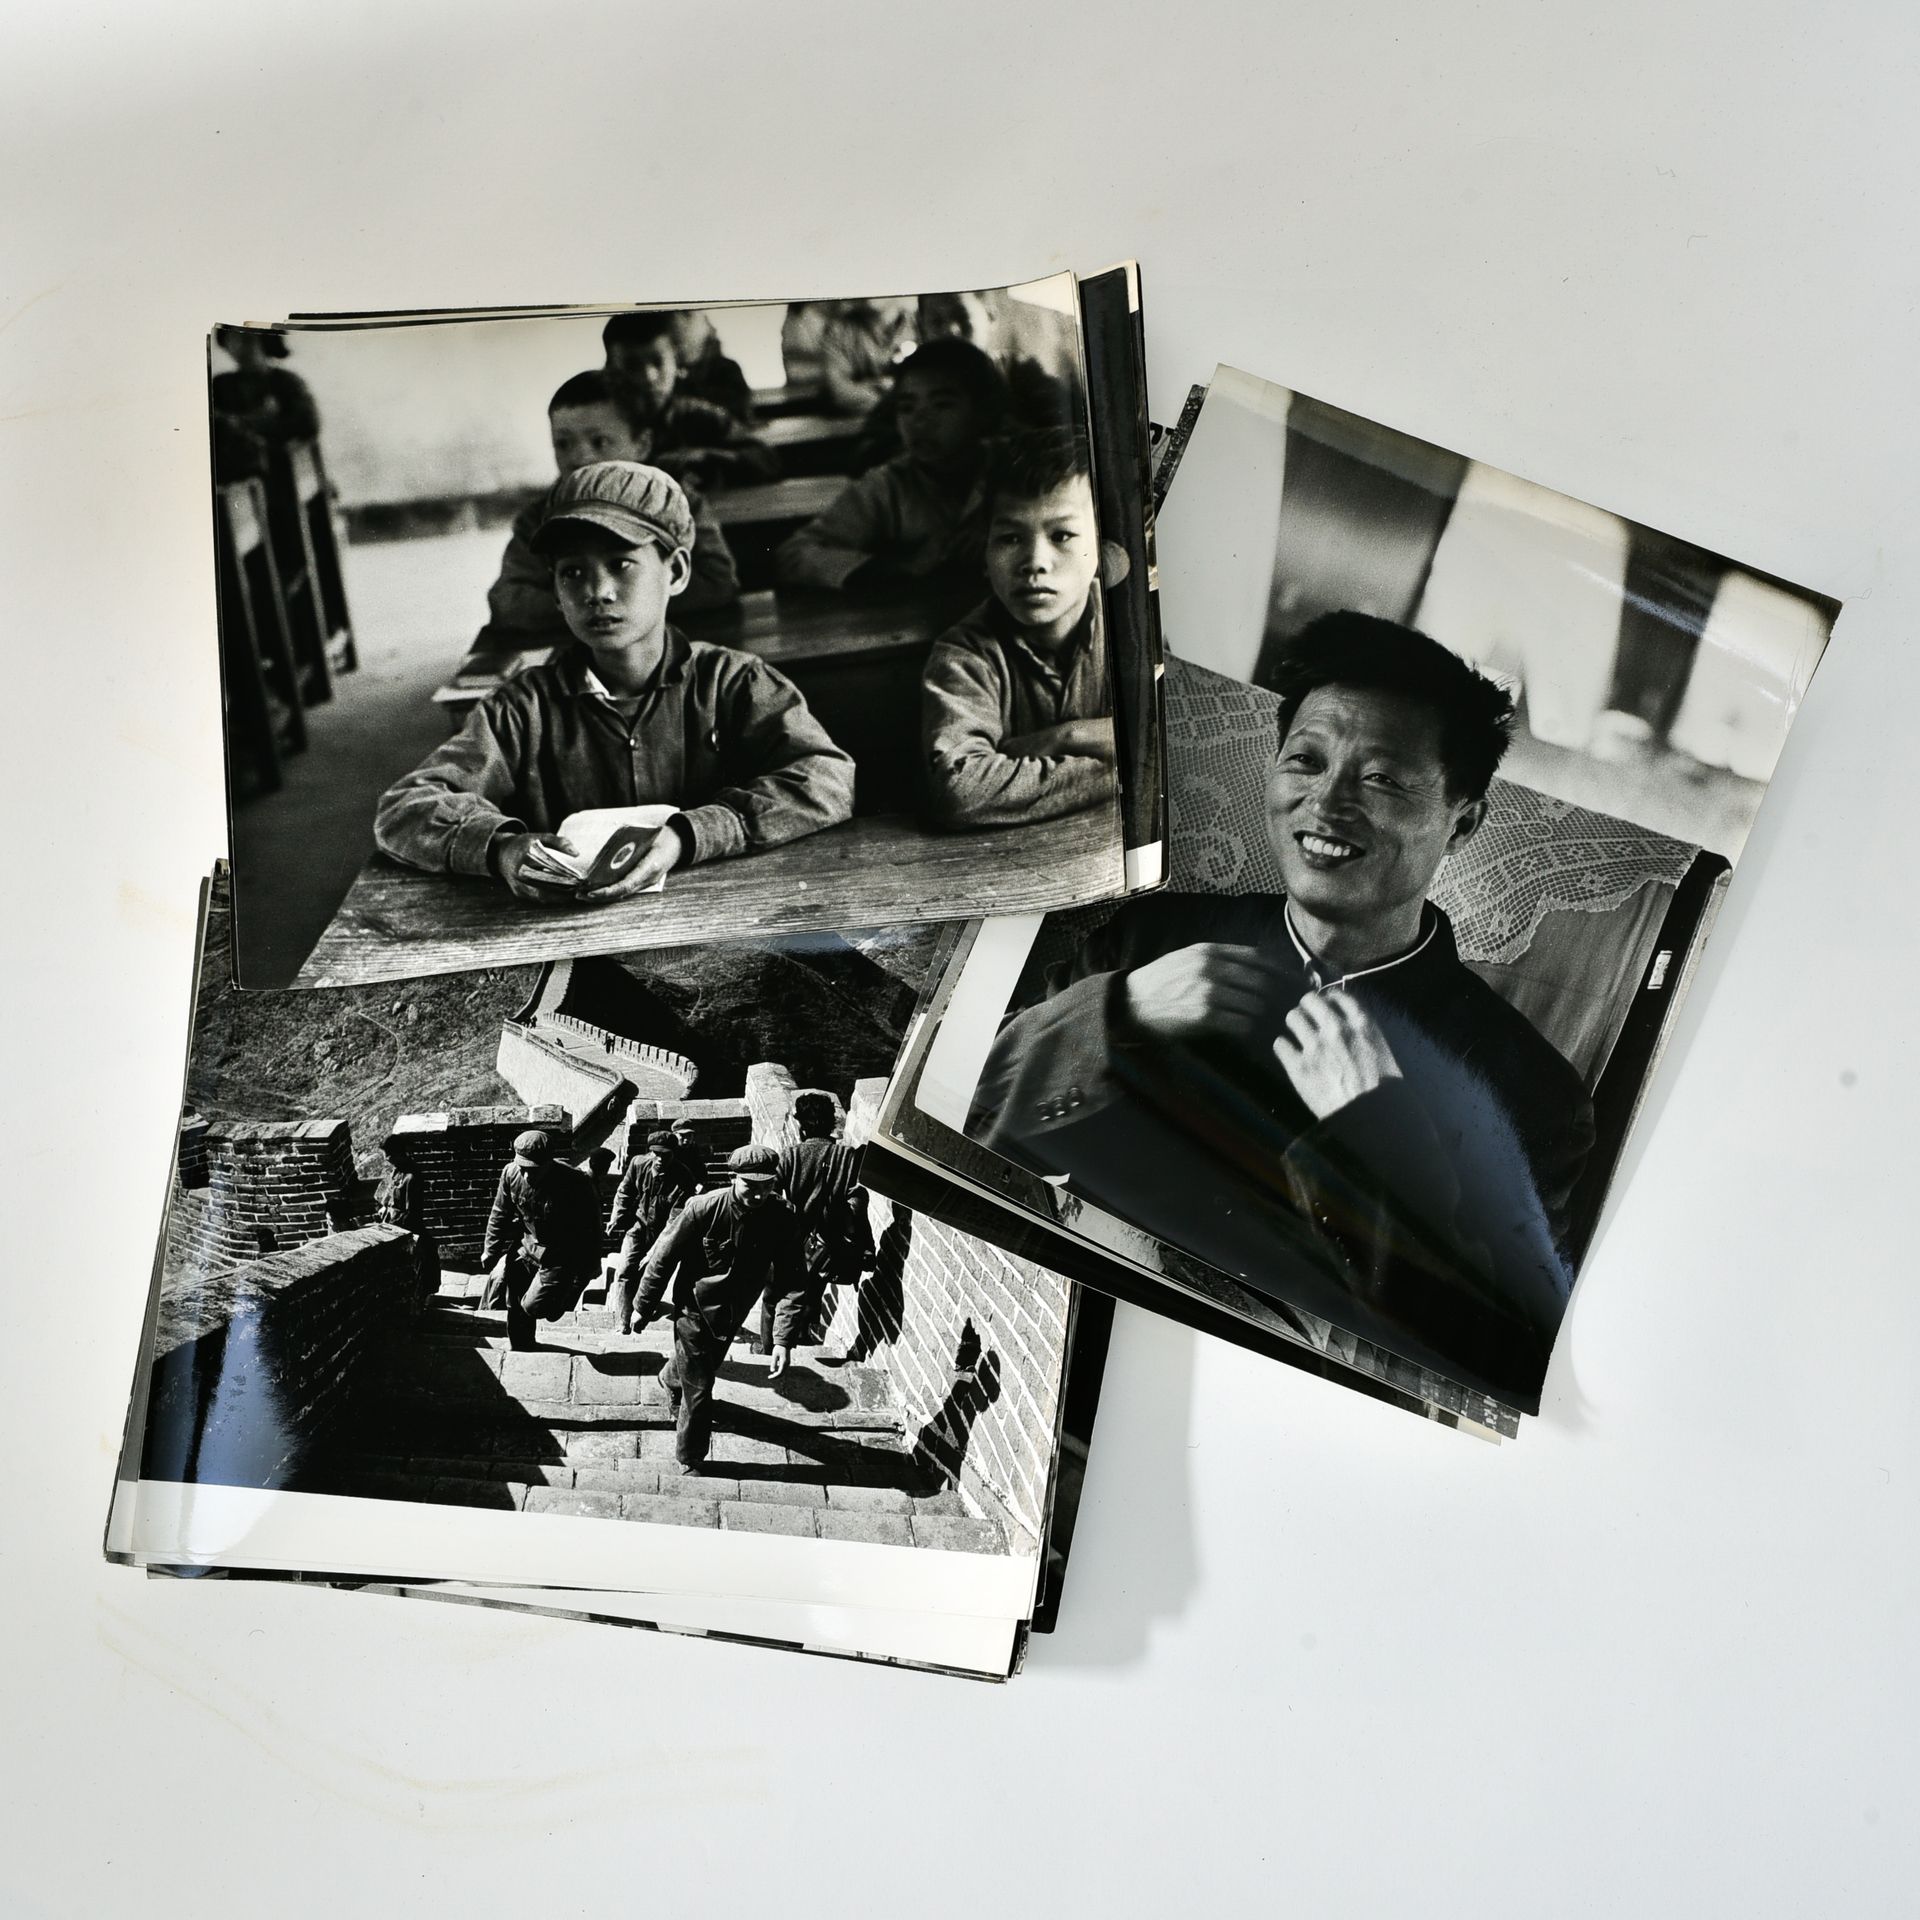 Photographies illustrant la Révolution Culturelle 中国（人民共和国），约1965-1979年

说明文化大革命&hellip;